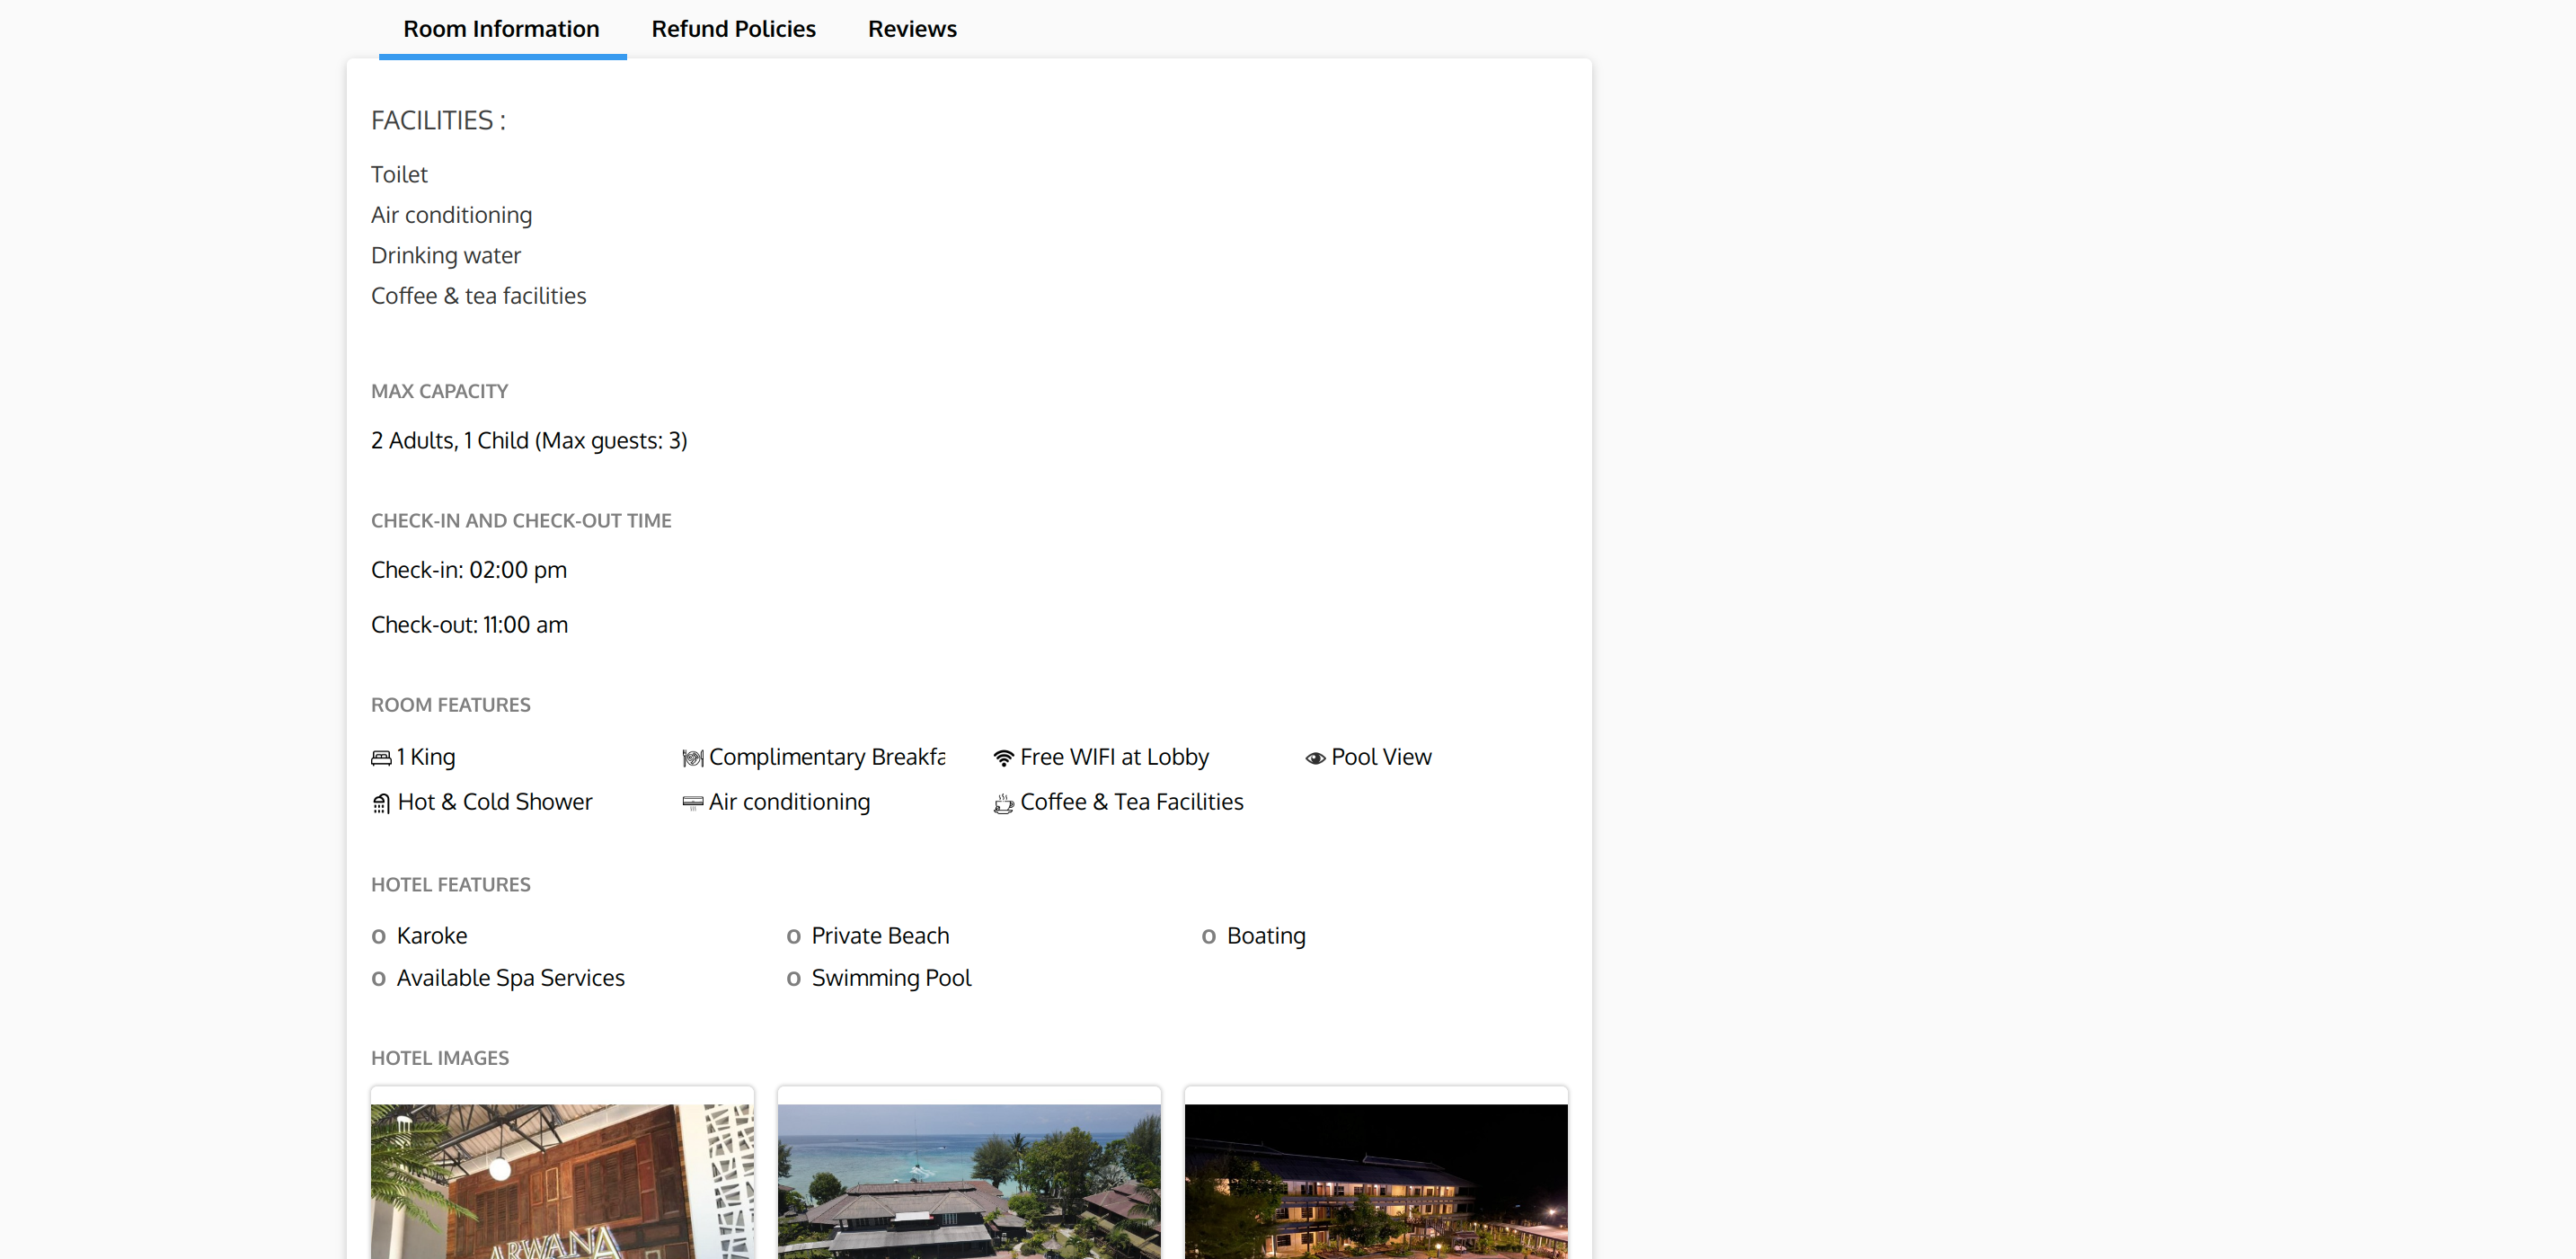 Room information page of Arwana Perhentian Resort booking website